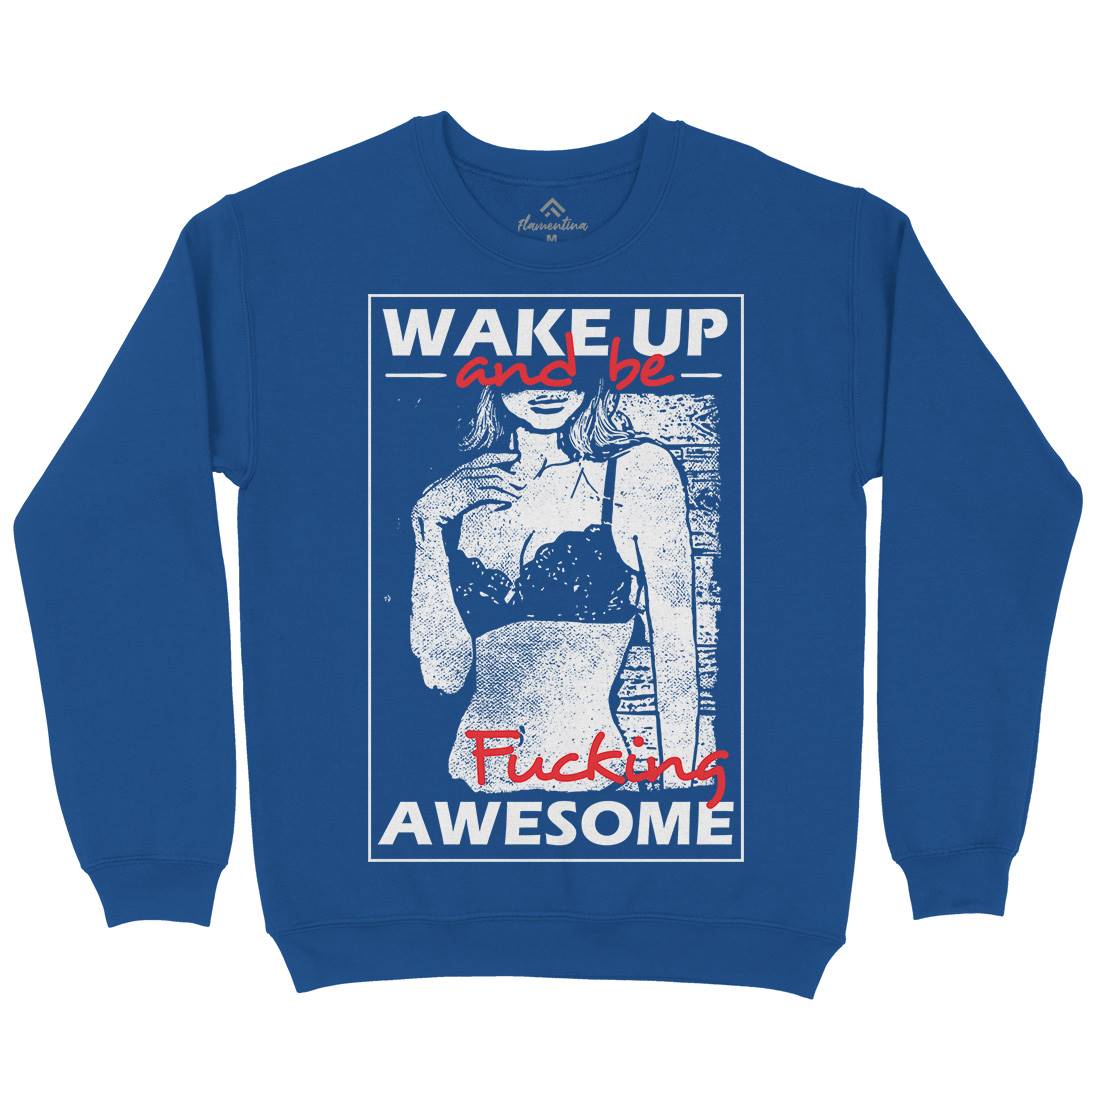 Wake Up And Be Awesome Kids Crew Neck Sweatshirt Gym C993